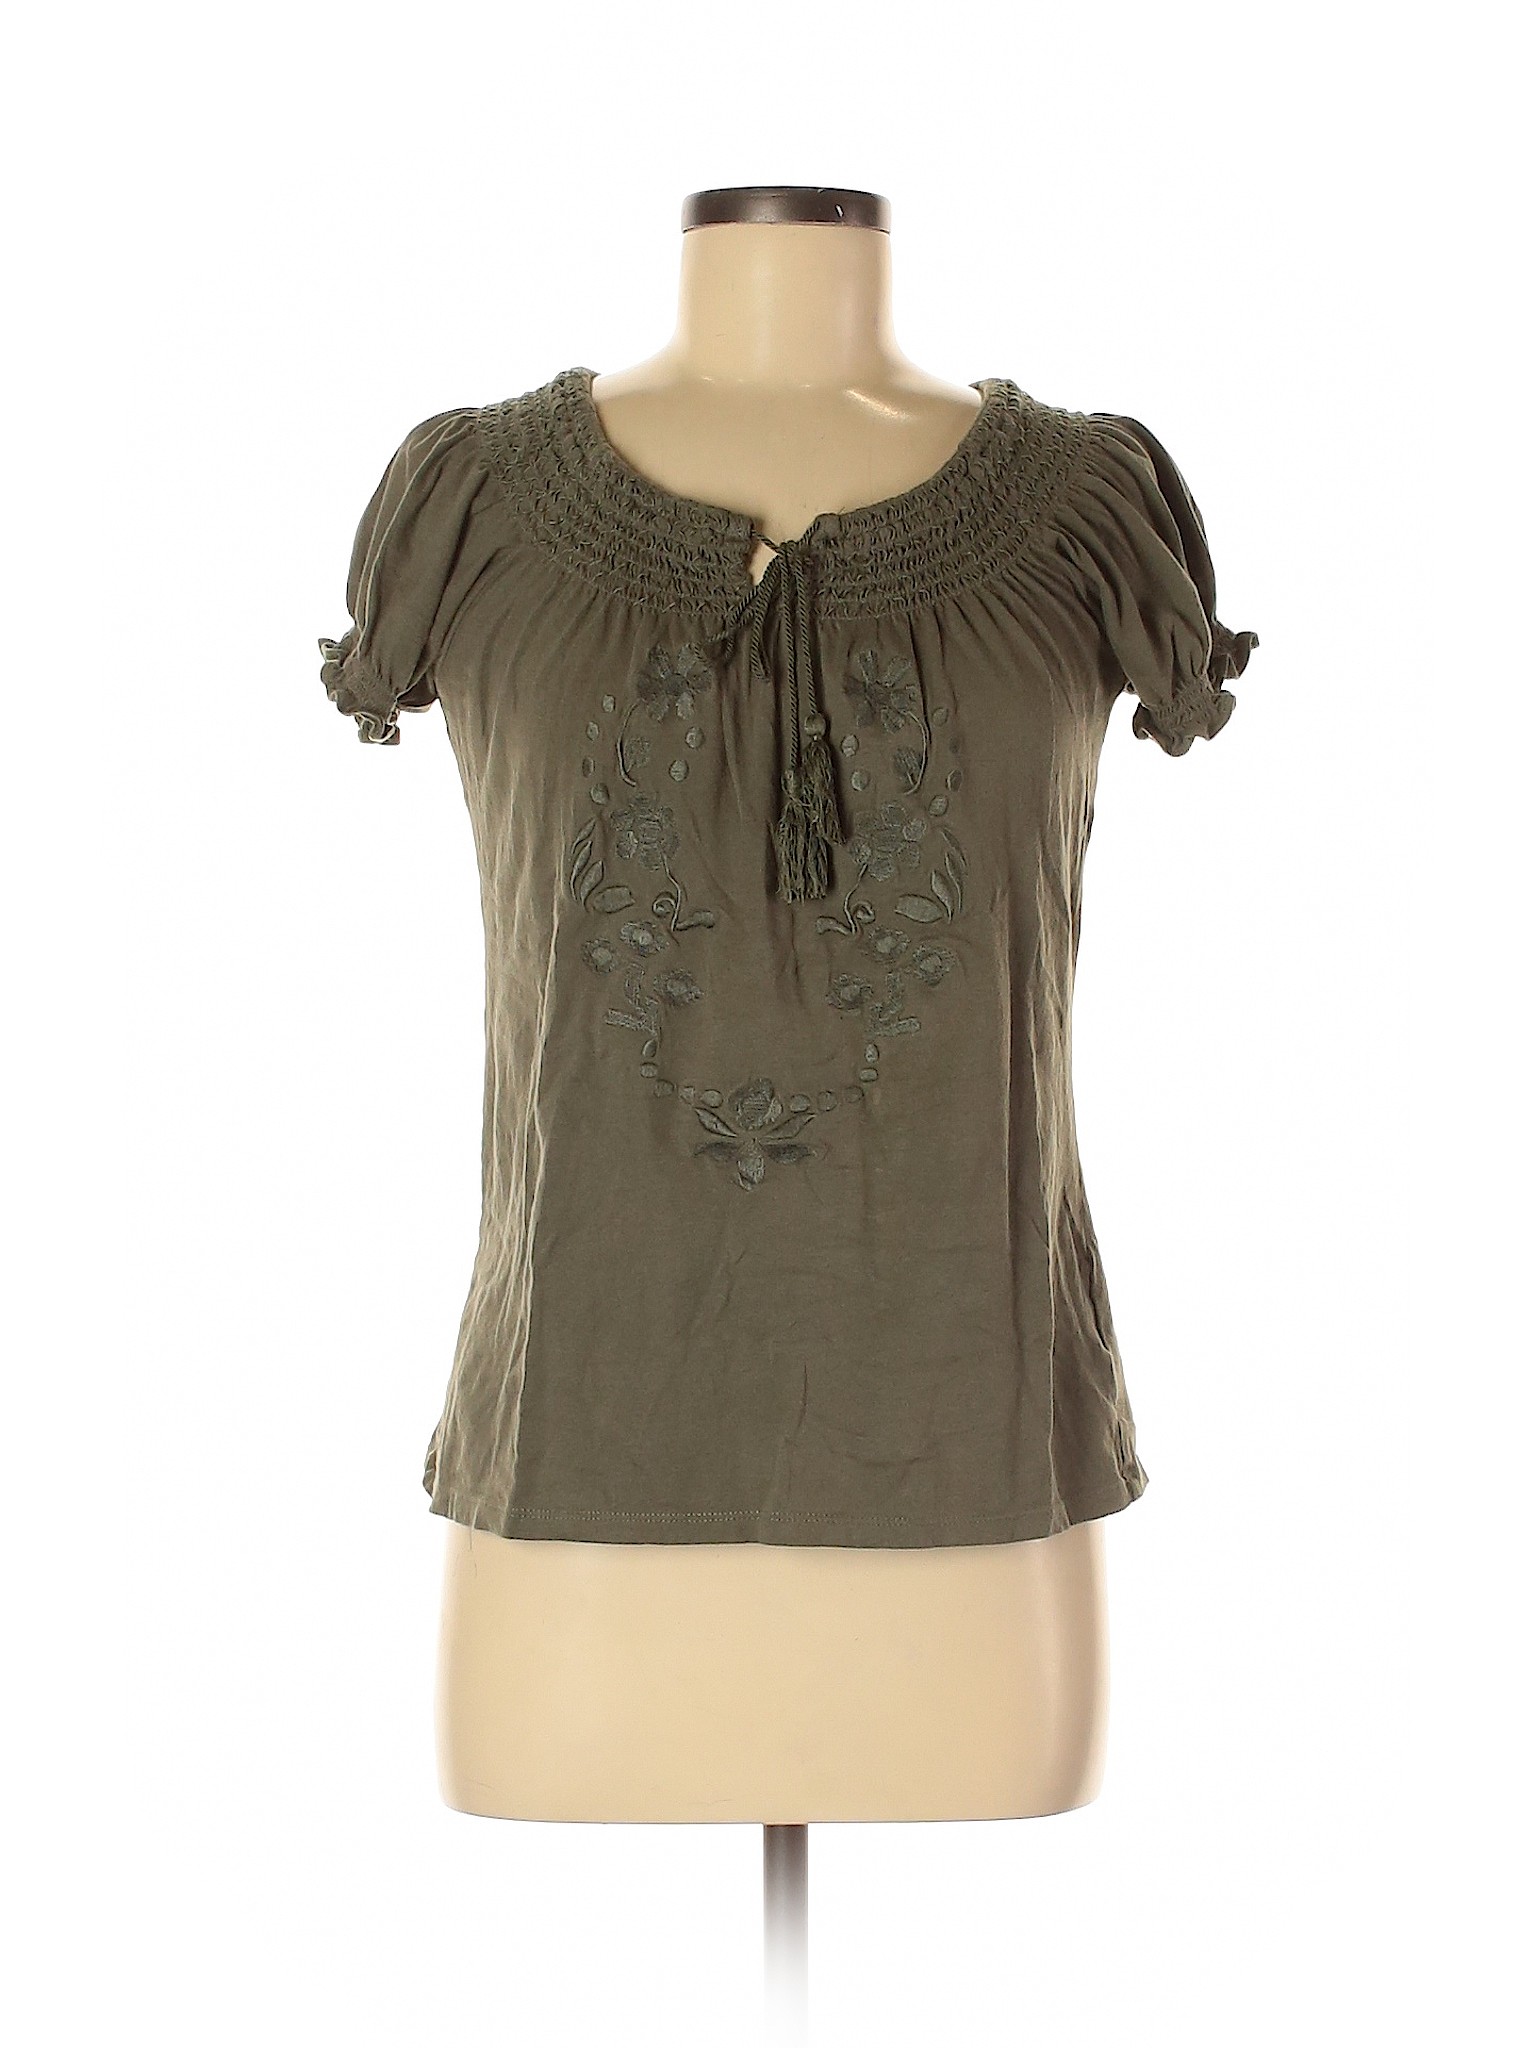 Gloria Vanderbilt Women Green Short Sleeve Top M | eBay